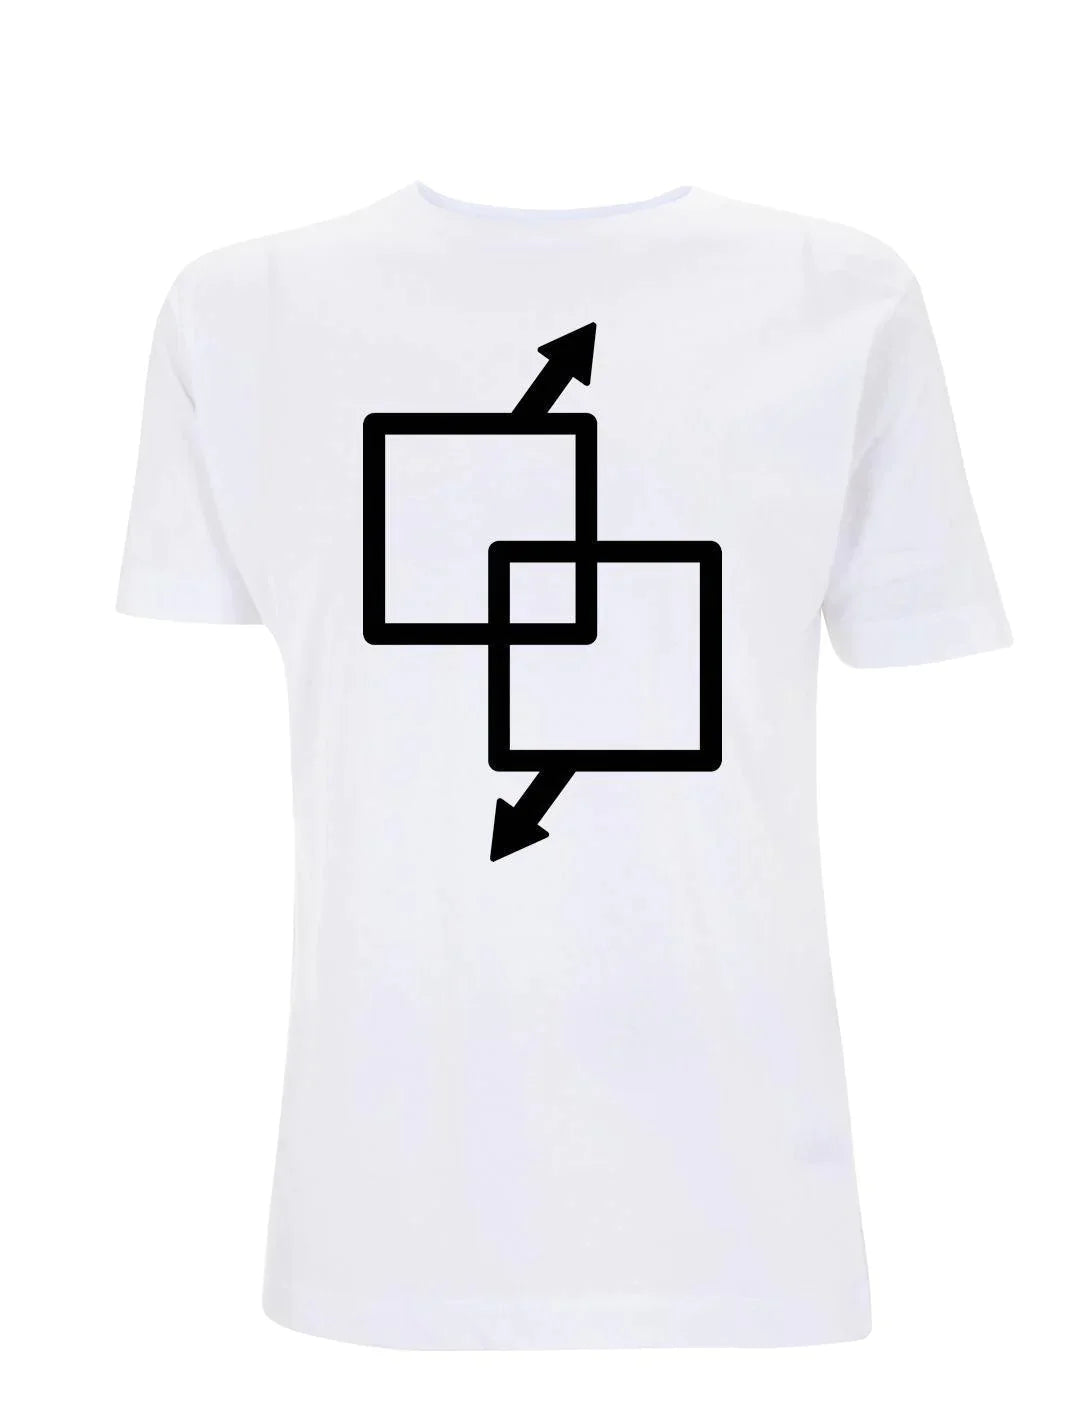 T-Shirt, The Chords, Mod Revival  